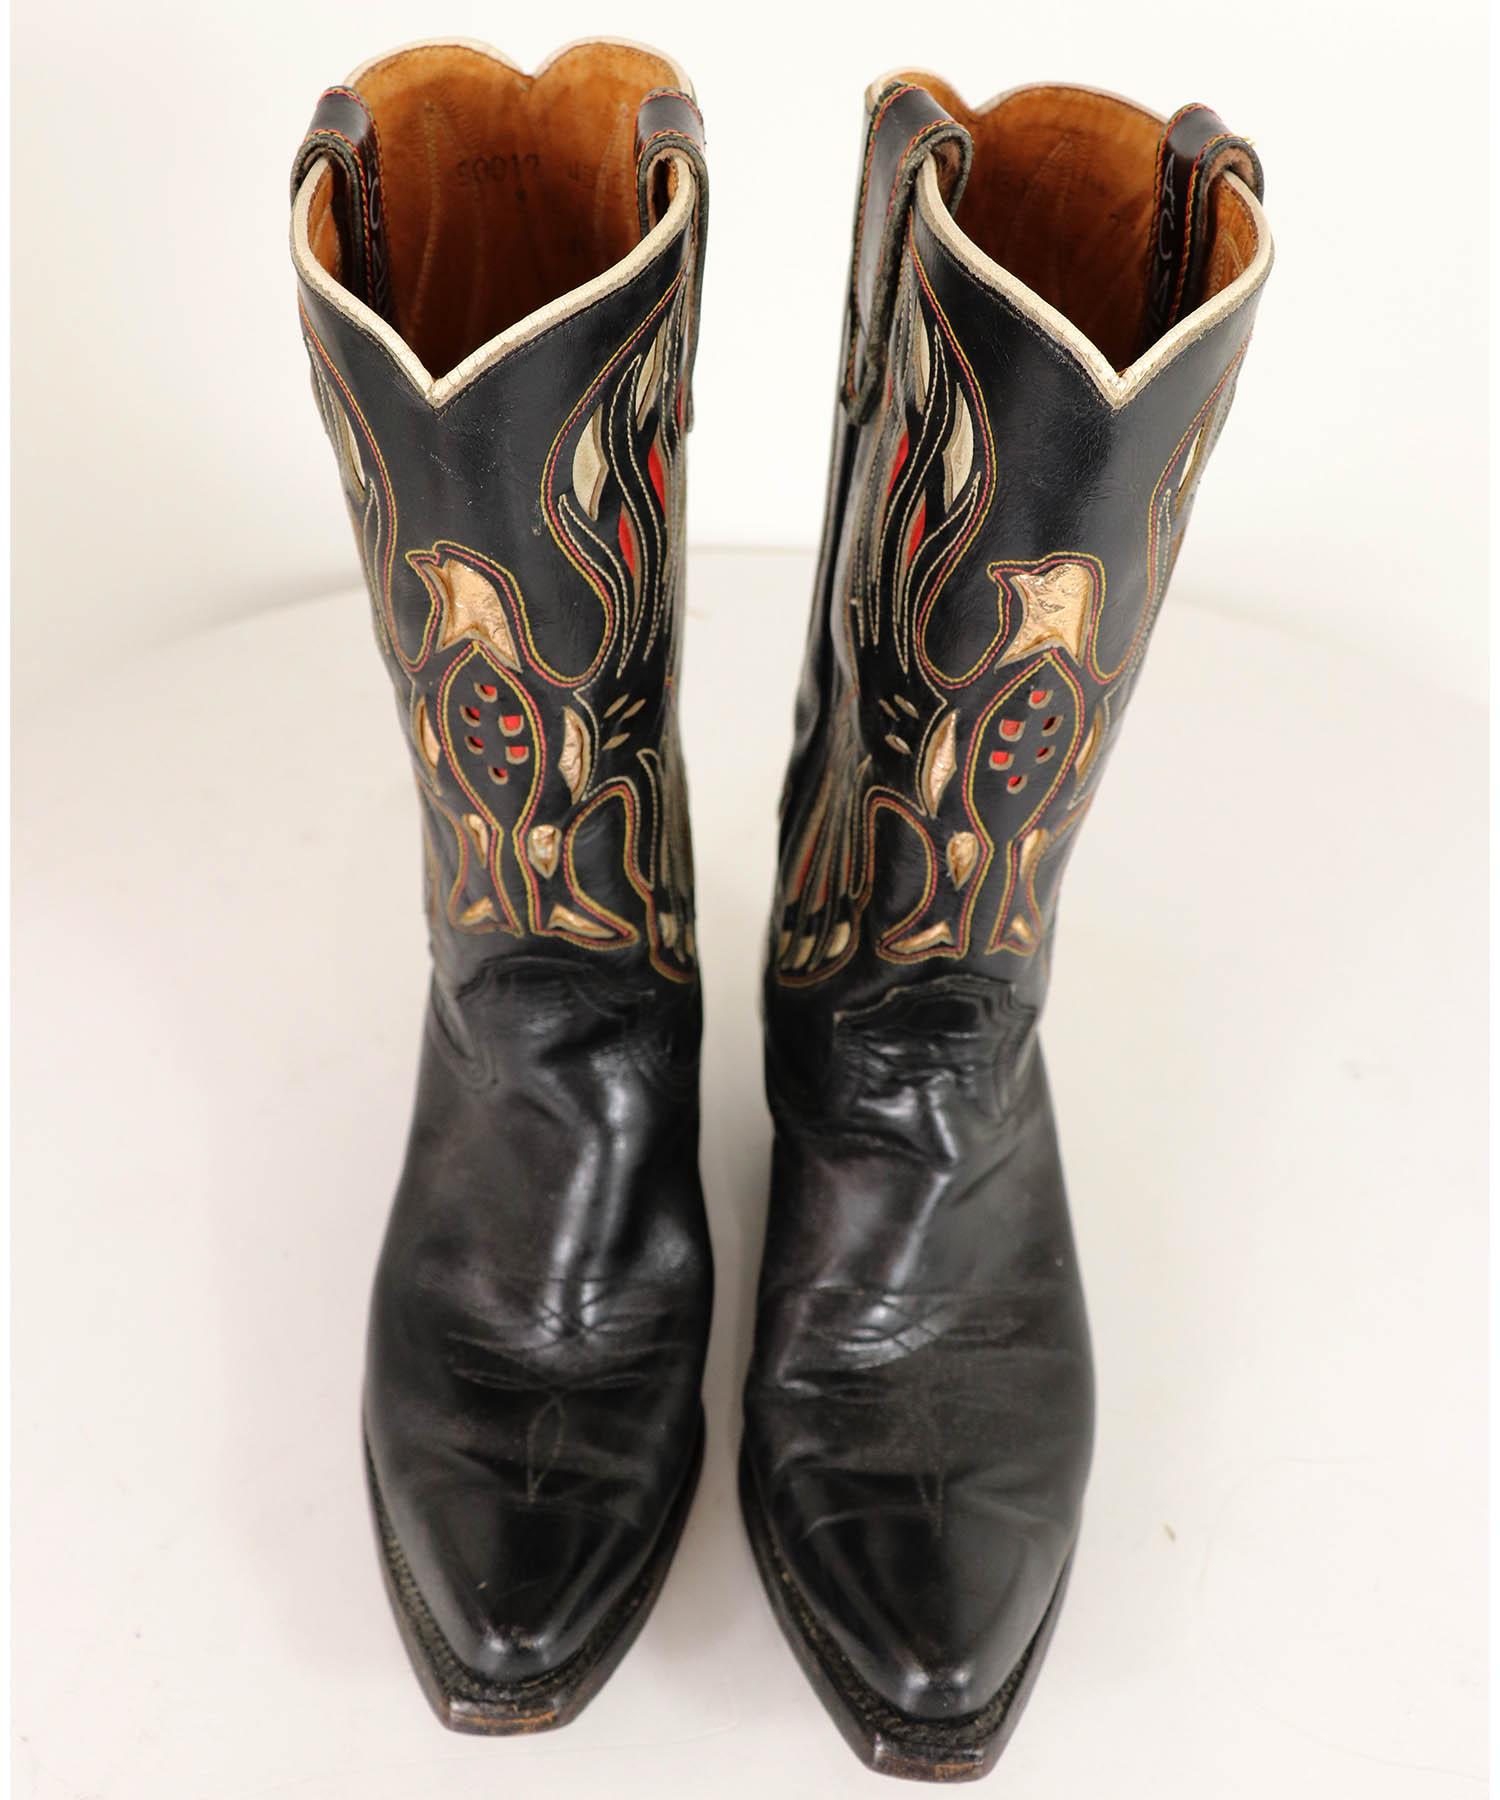 1950s cowboy boots